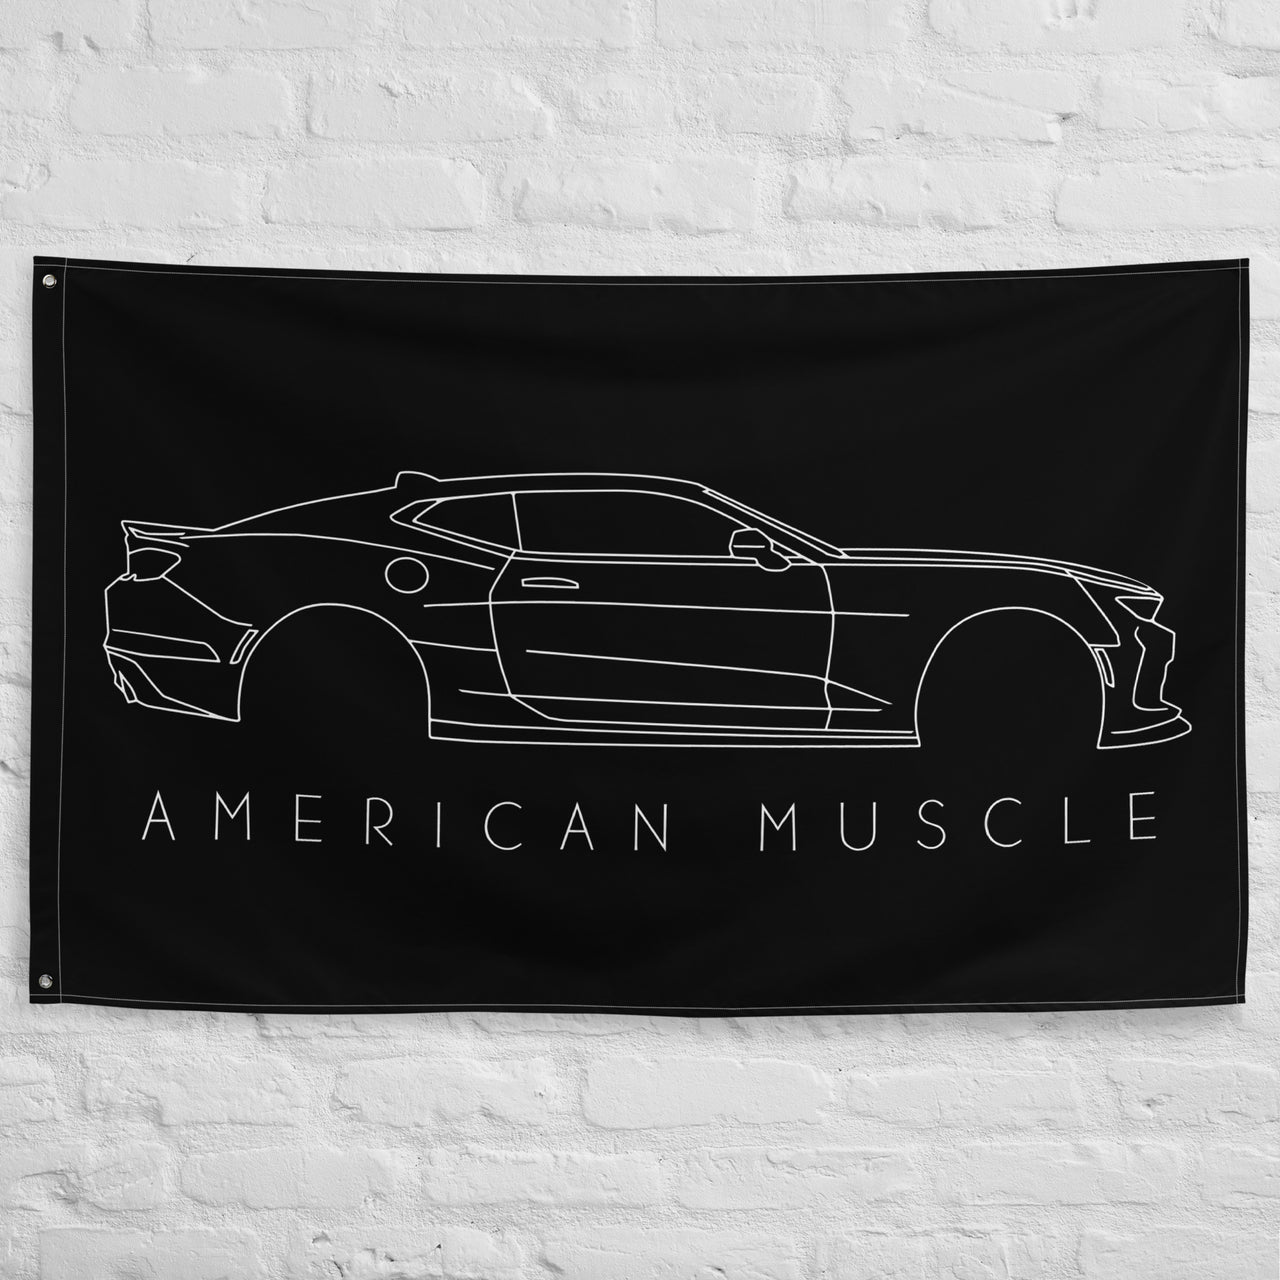 6th Gen Camaro Garage Flag Wall Banner Hanging on a brick wall